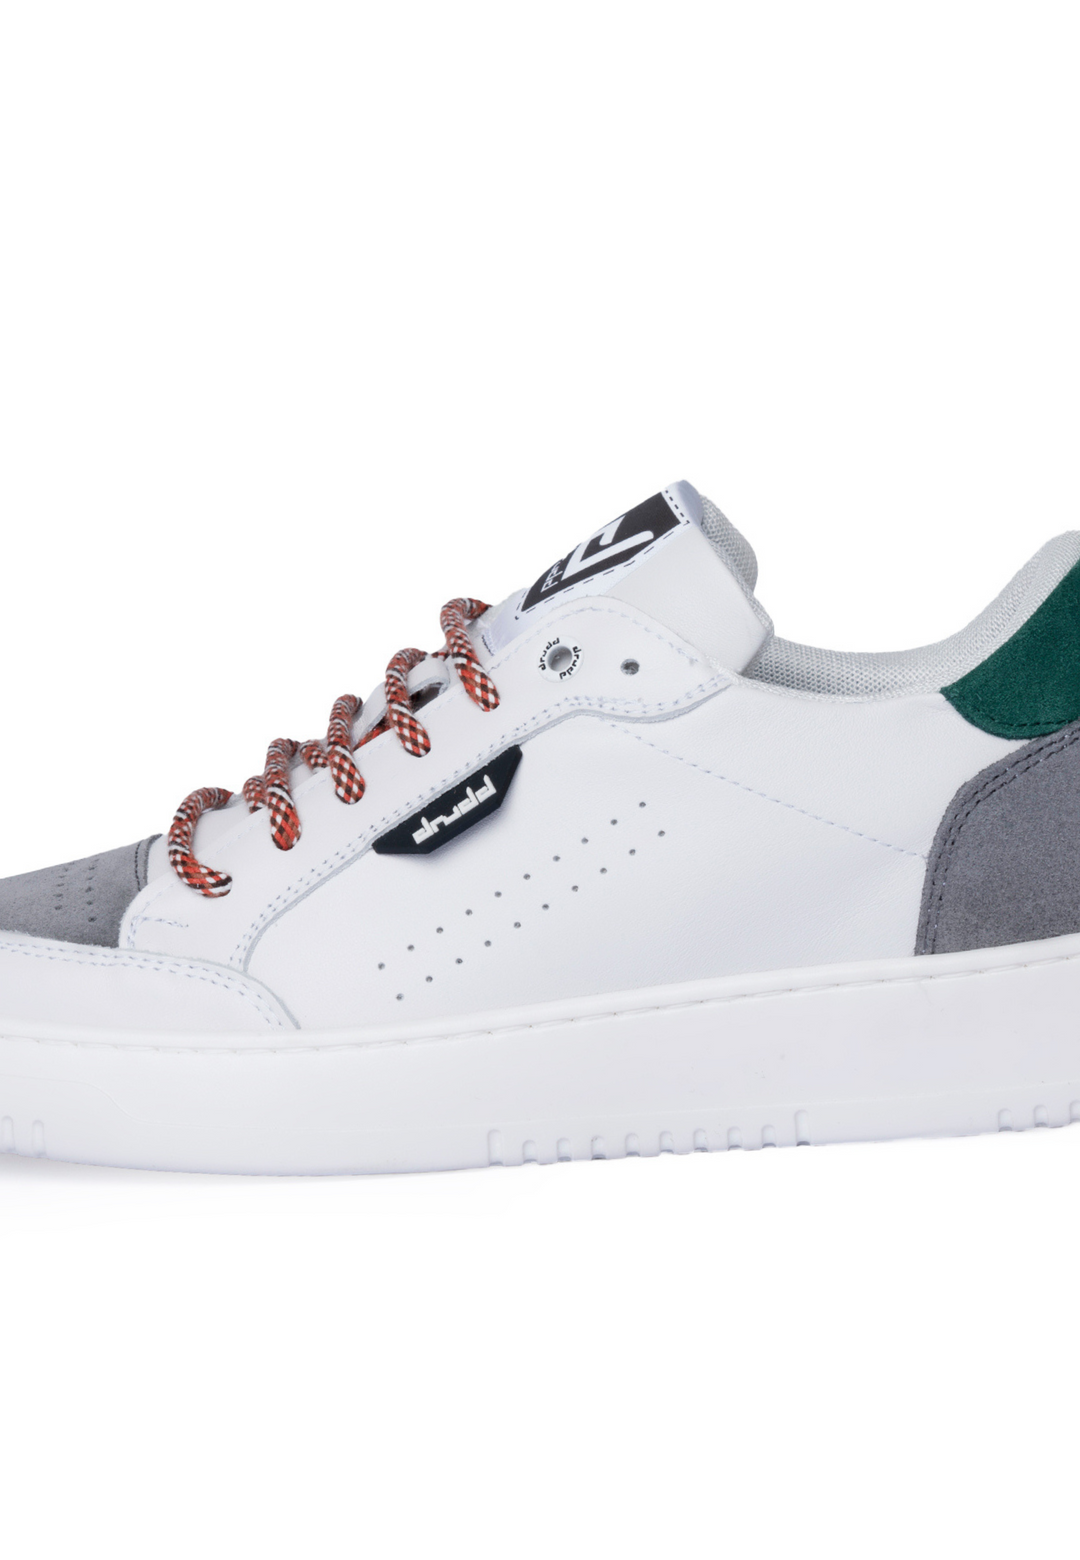 Sneakers Pelle Bianca e Verde - D-310